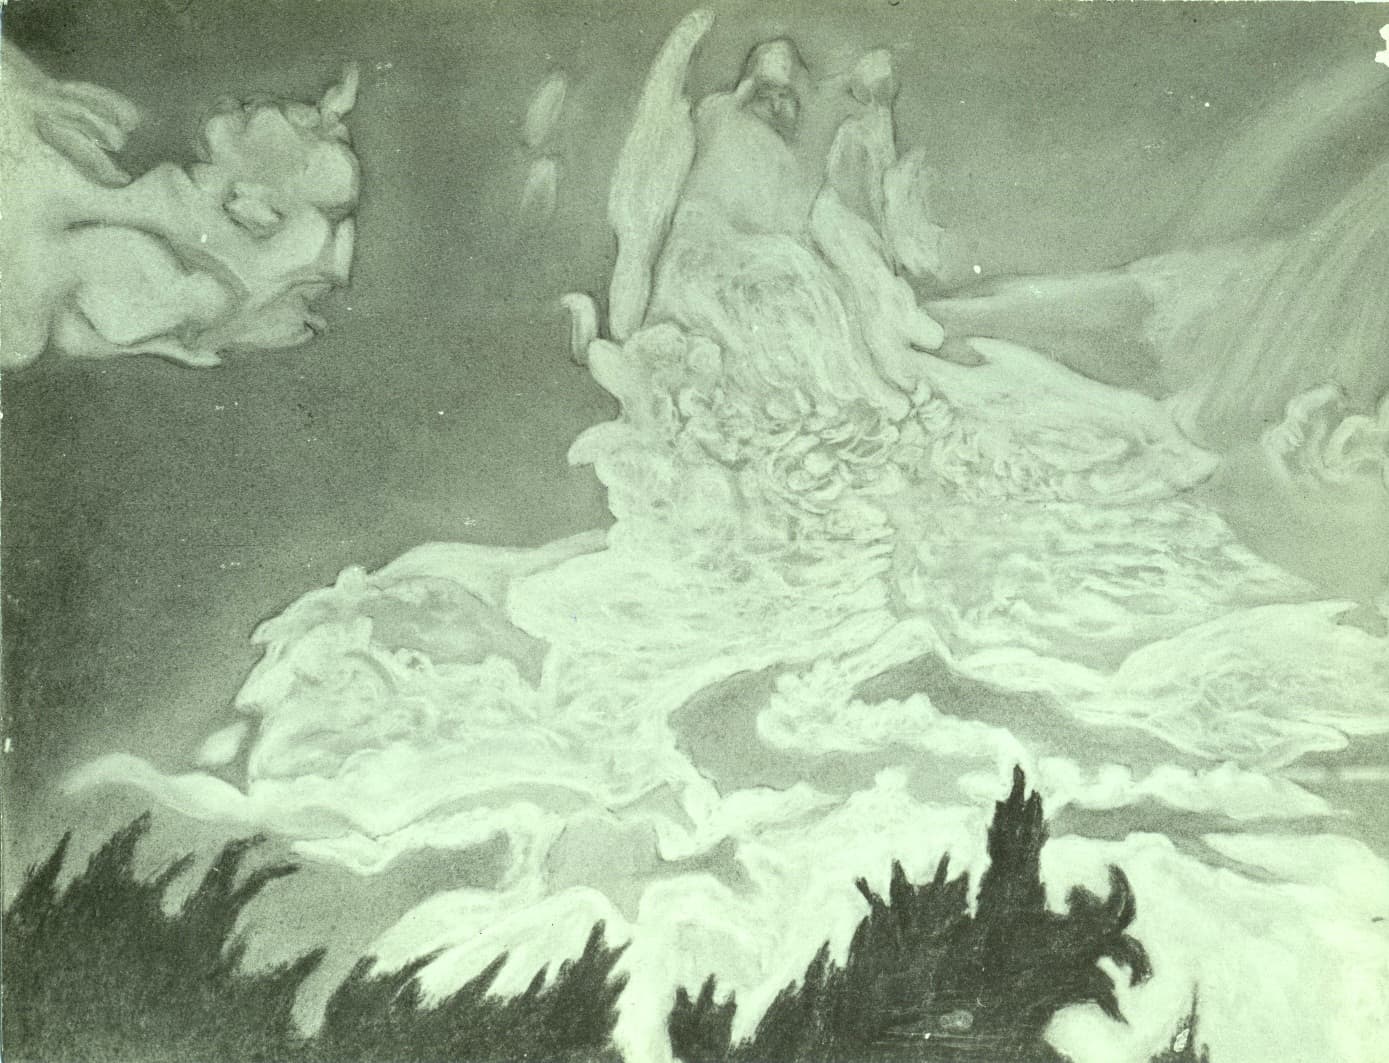 П.П. Фатеев. Из цикла "Облака". 1933 год